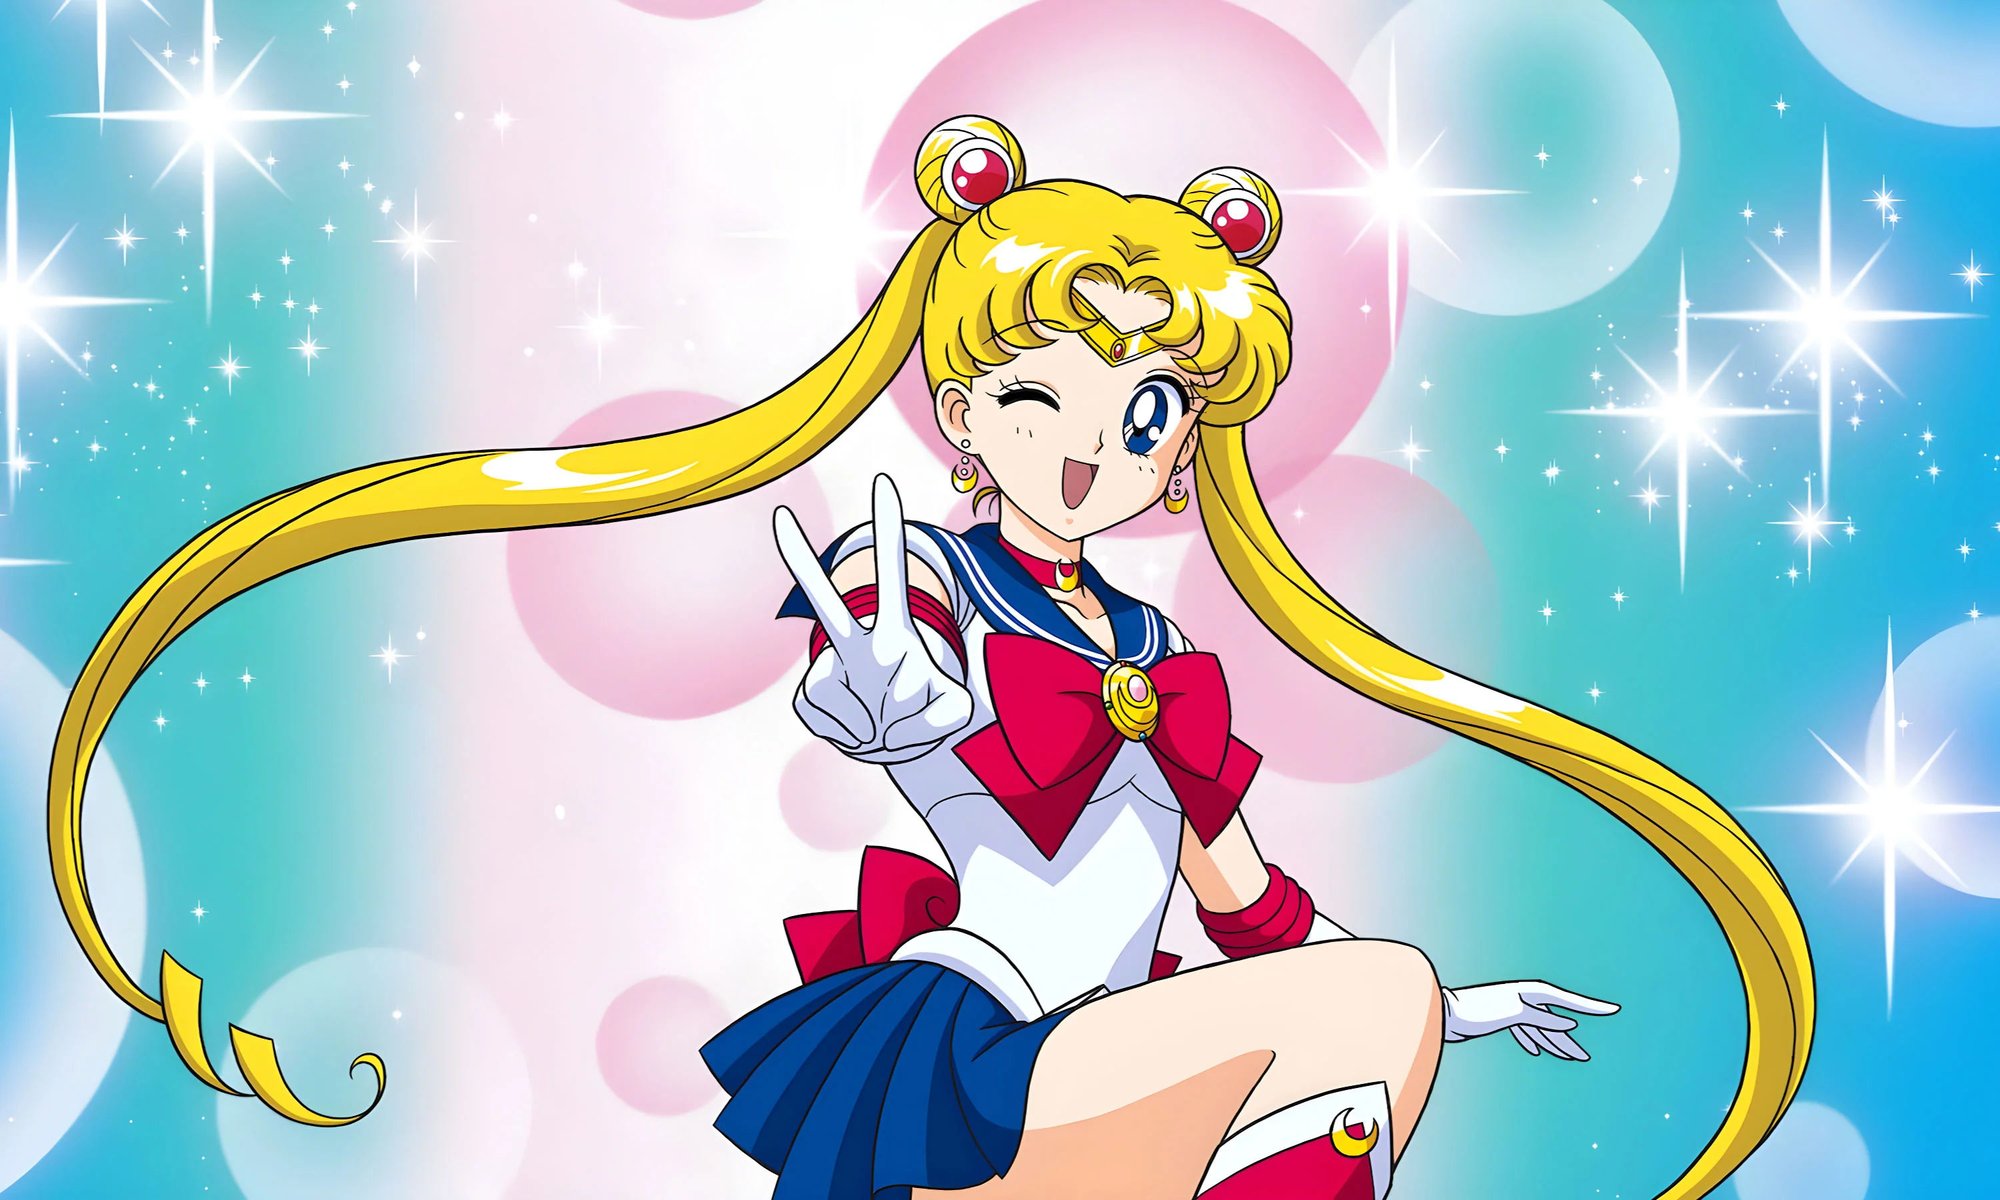 Usagi Tsukino/Sailor Moon (Sailor Moon)